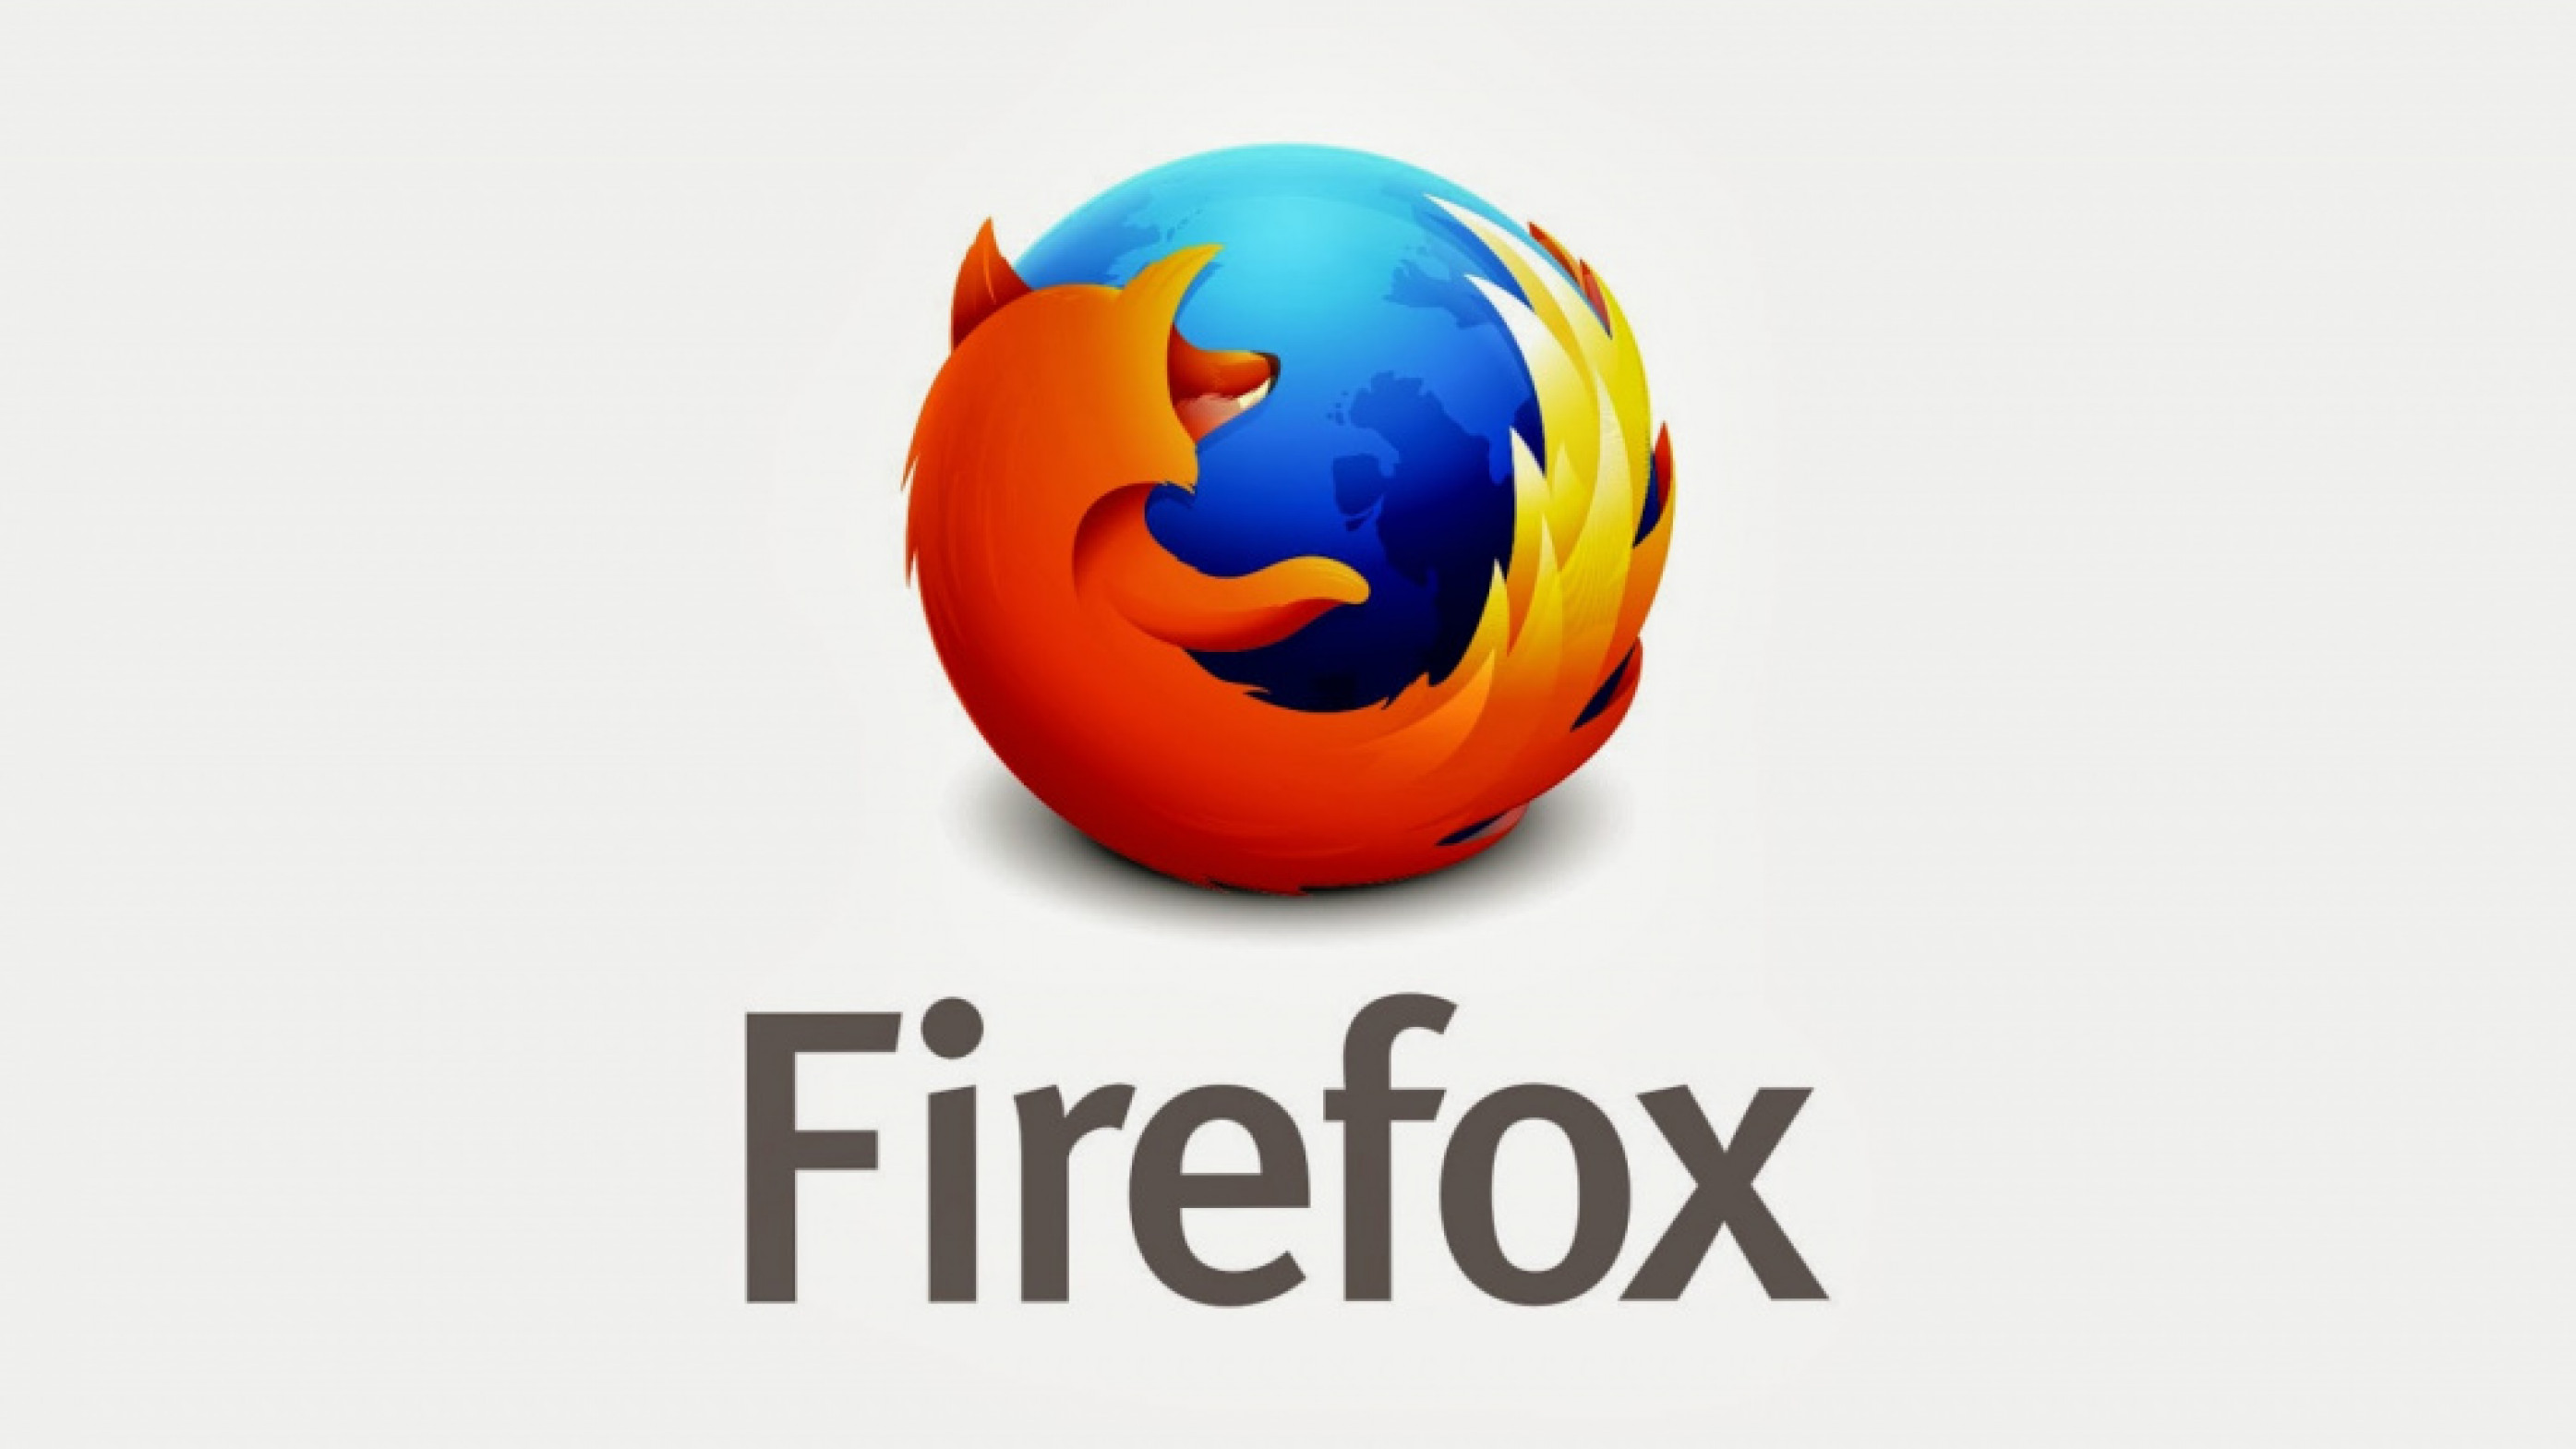 Версия браузера firefox. Эмблема Firefox. Mozilla Firefox logo. Логотип браузера мазила. Firefox браузер лого.